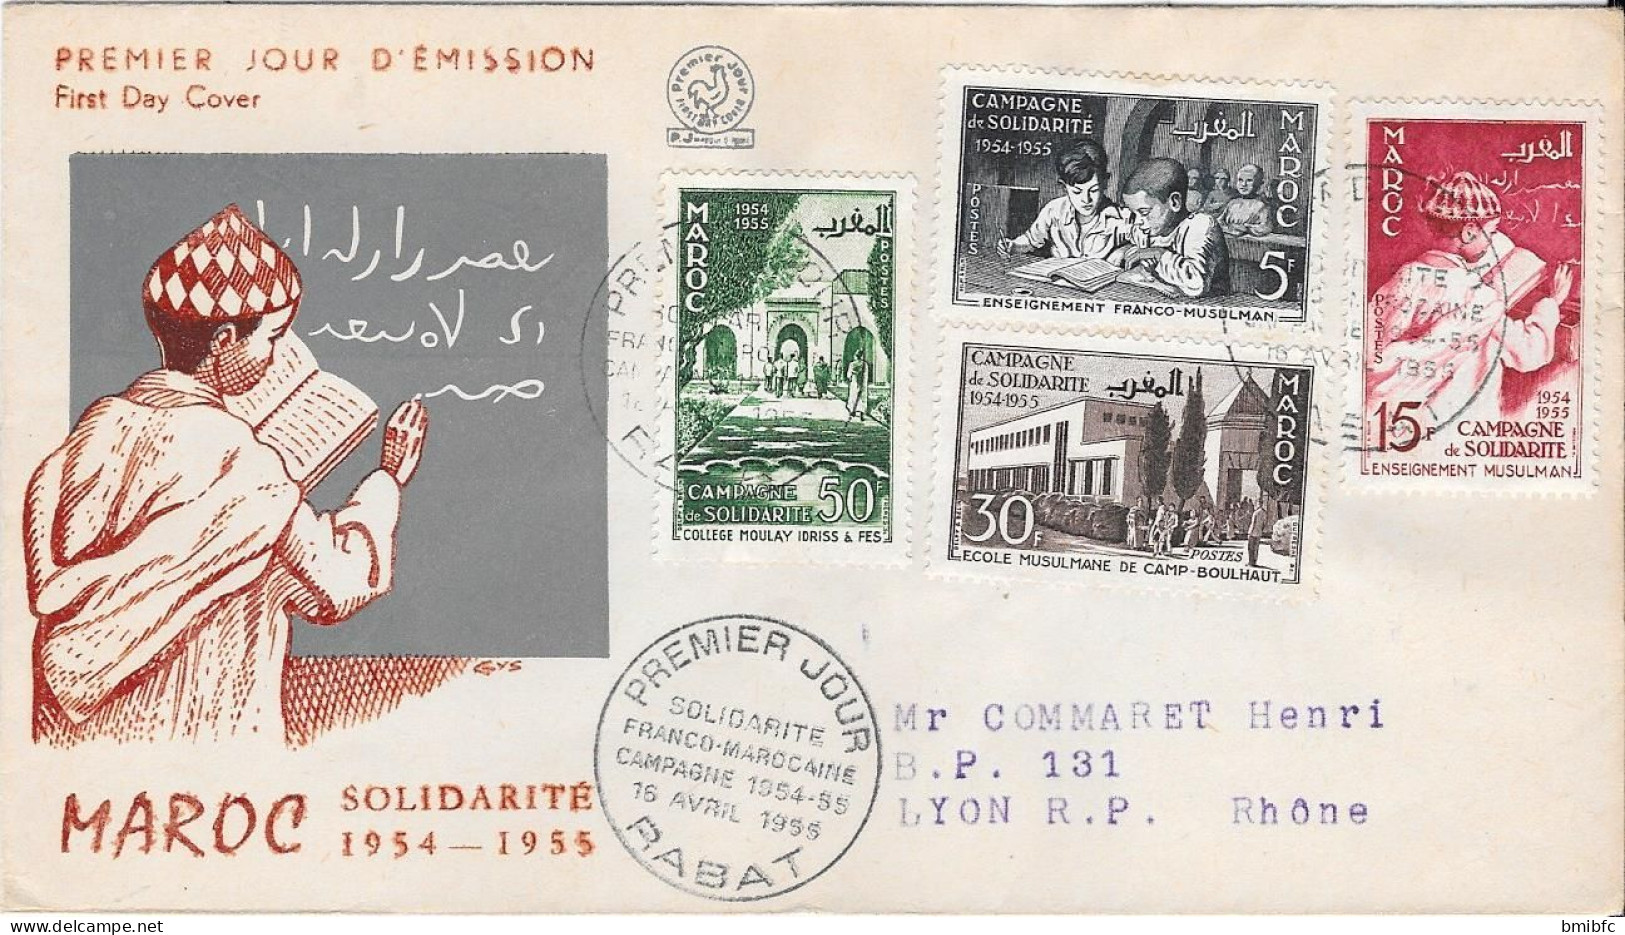 MAROC SOLIDARITÉ 1954-1955 - Marokko (1956-...)